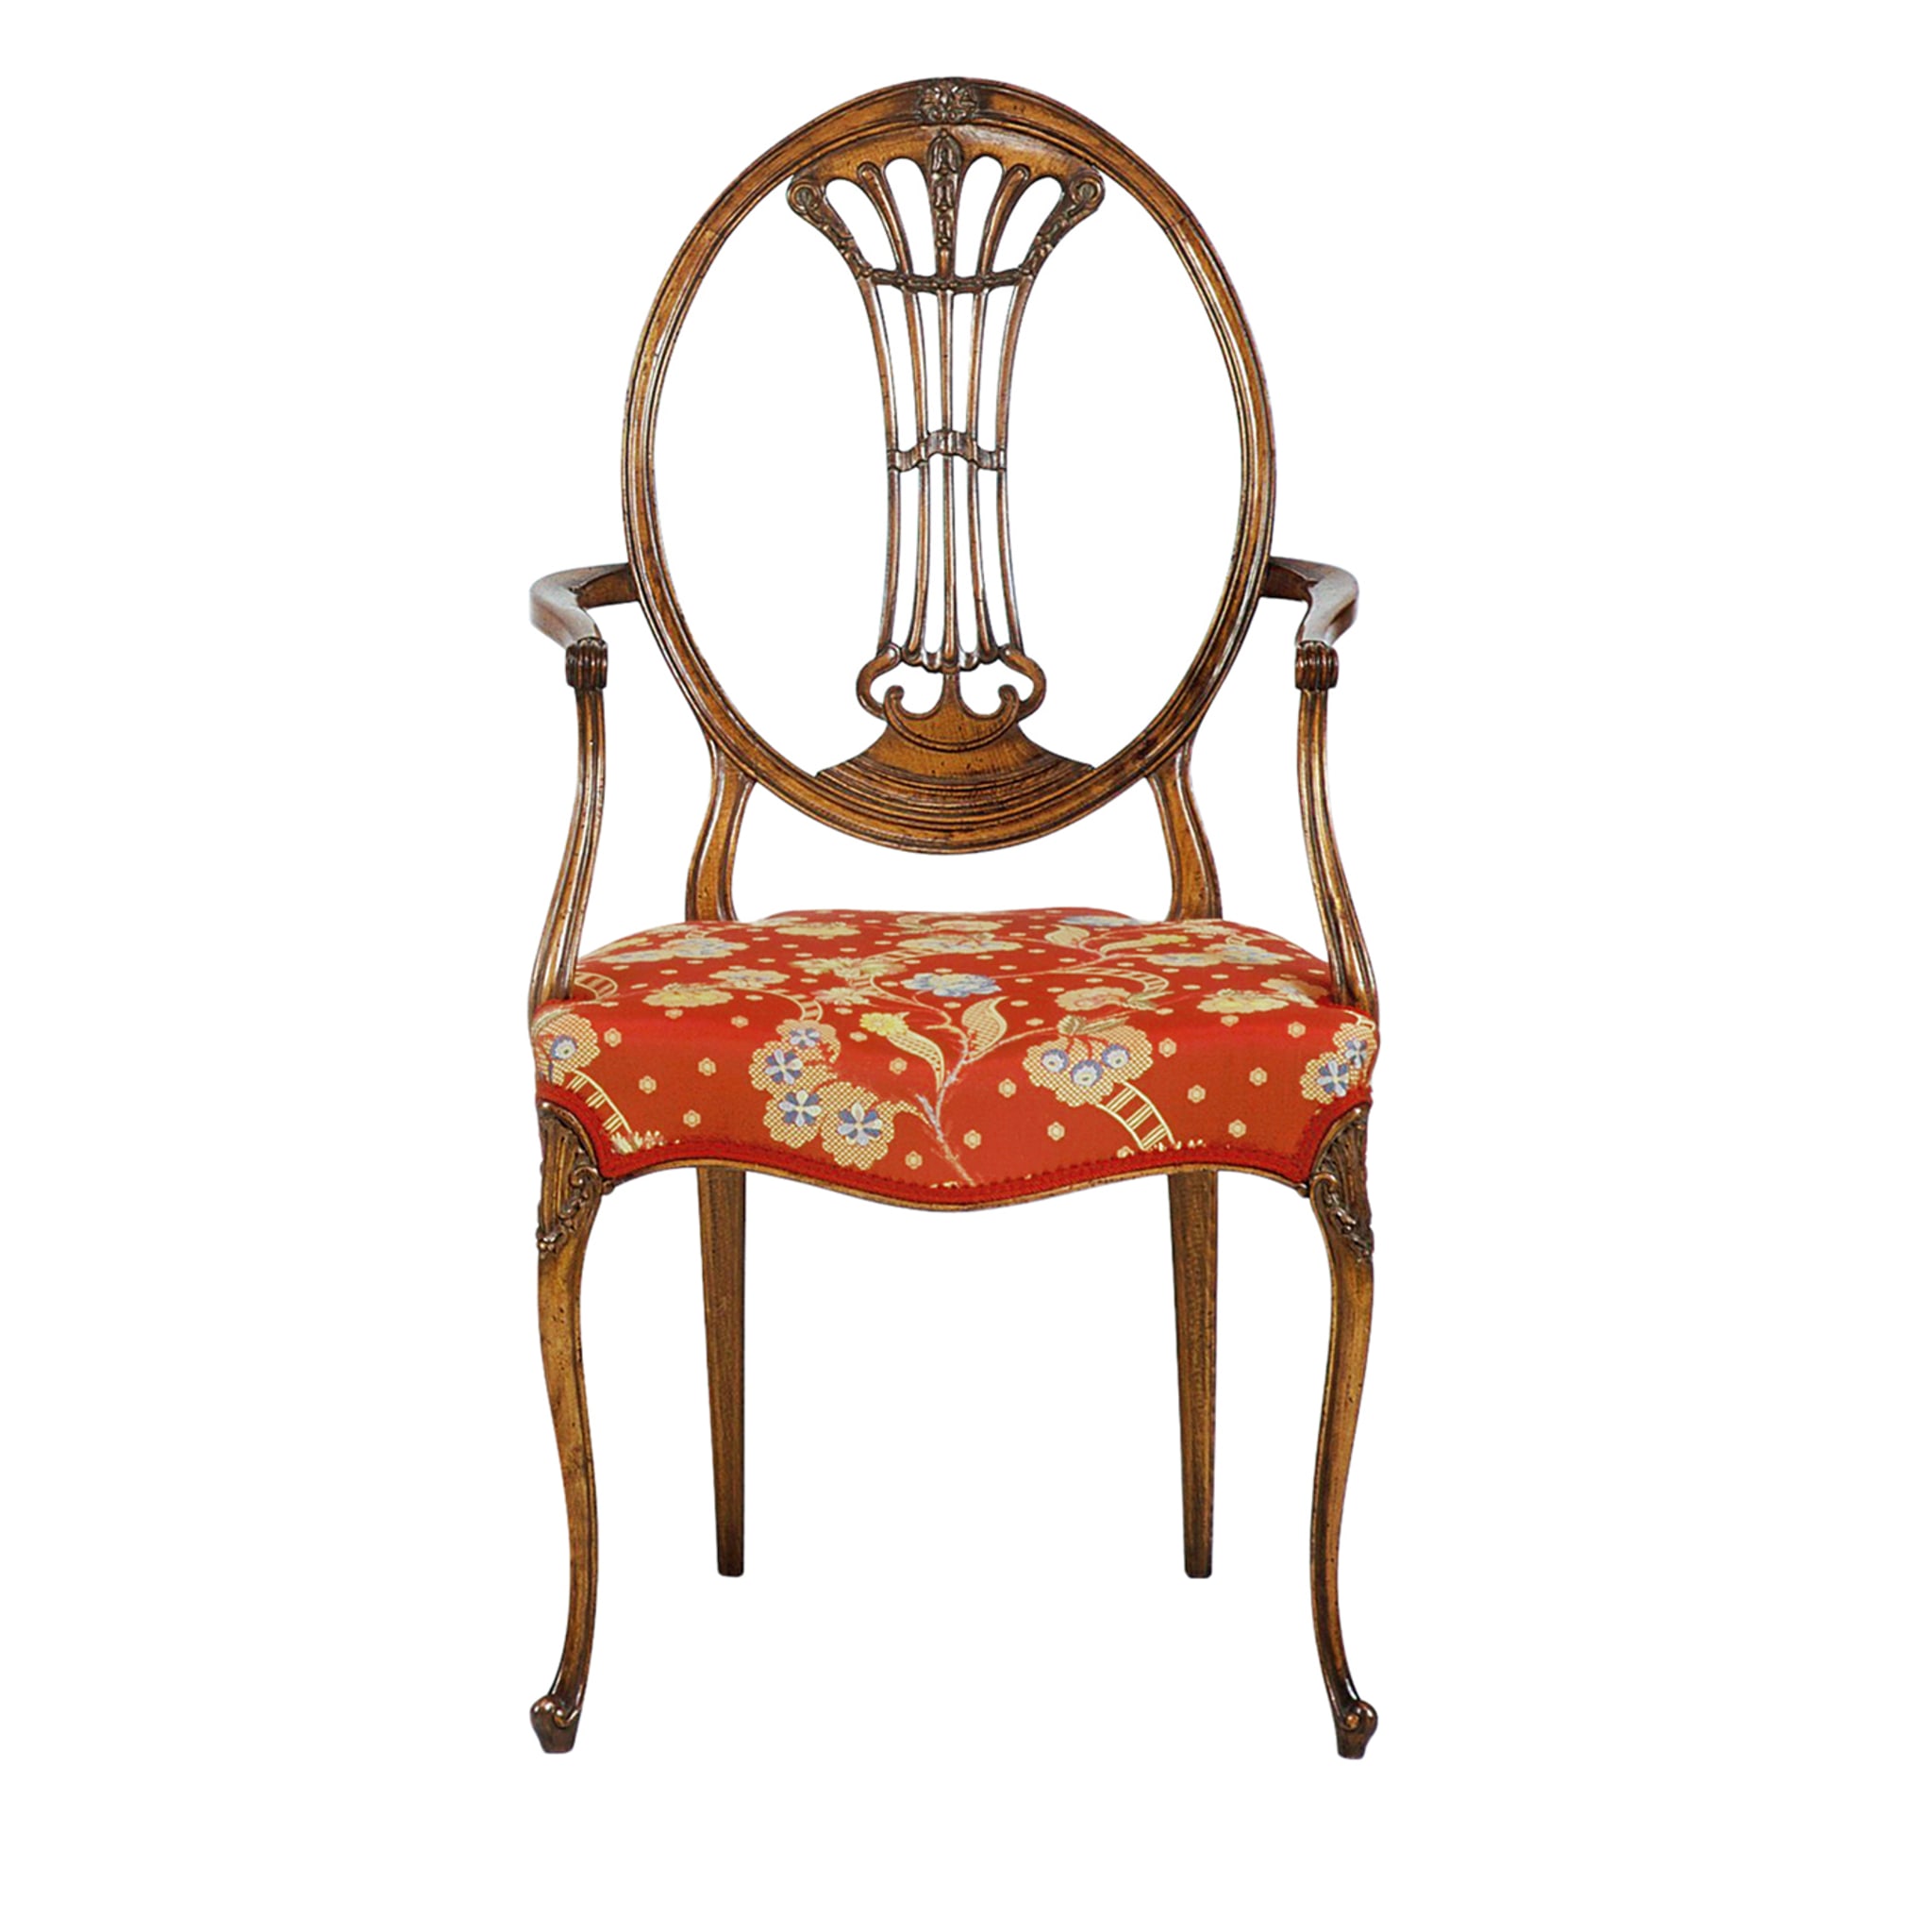 Hepplewhite-Style Red-Cushion Chair #1 - Main view